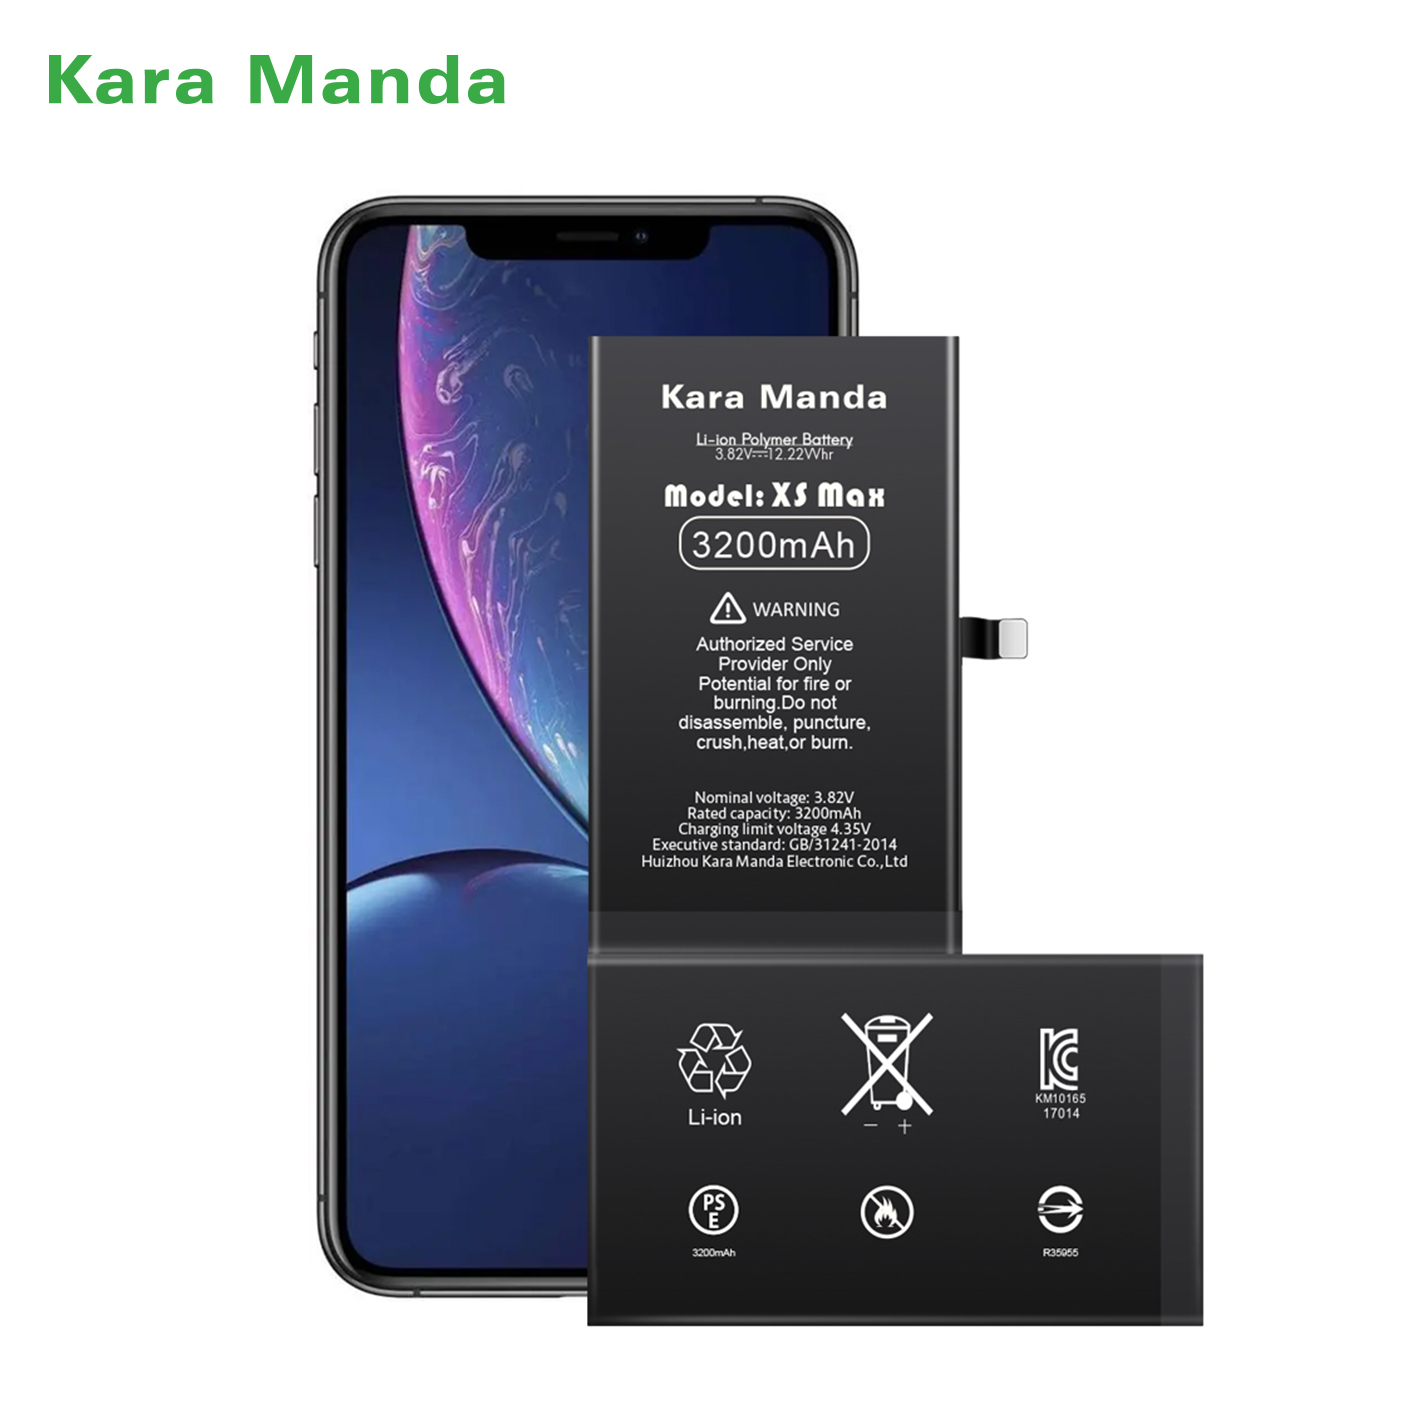 Get original 3200mAh iPhone XS Max Replacement Batteries from <a href='/wholesale-oem/'>Wholesale OEM</a> Factory - <a href='/kara-manda/'>Kara Manda</a>